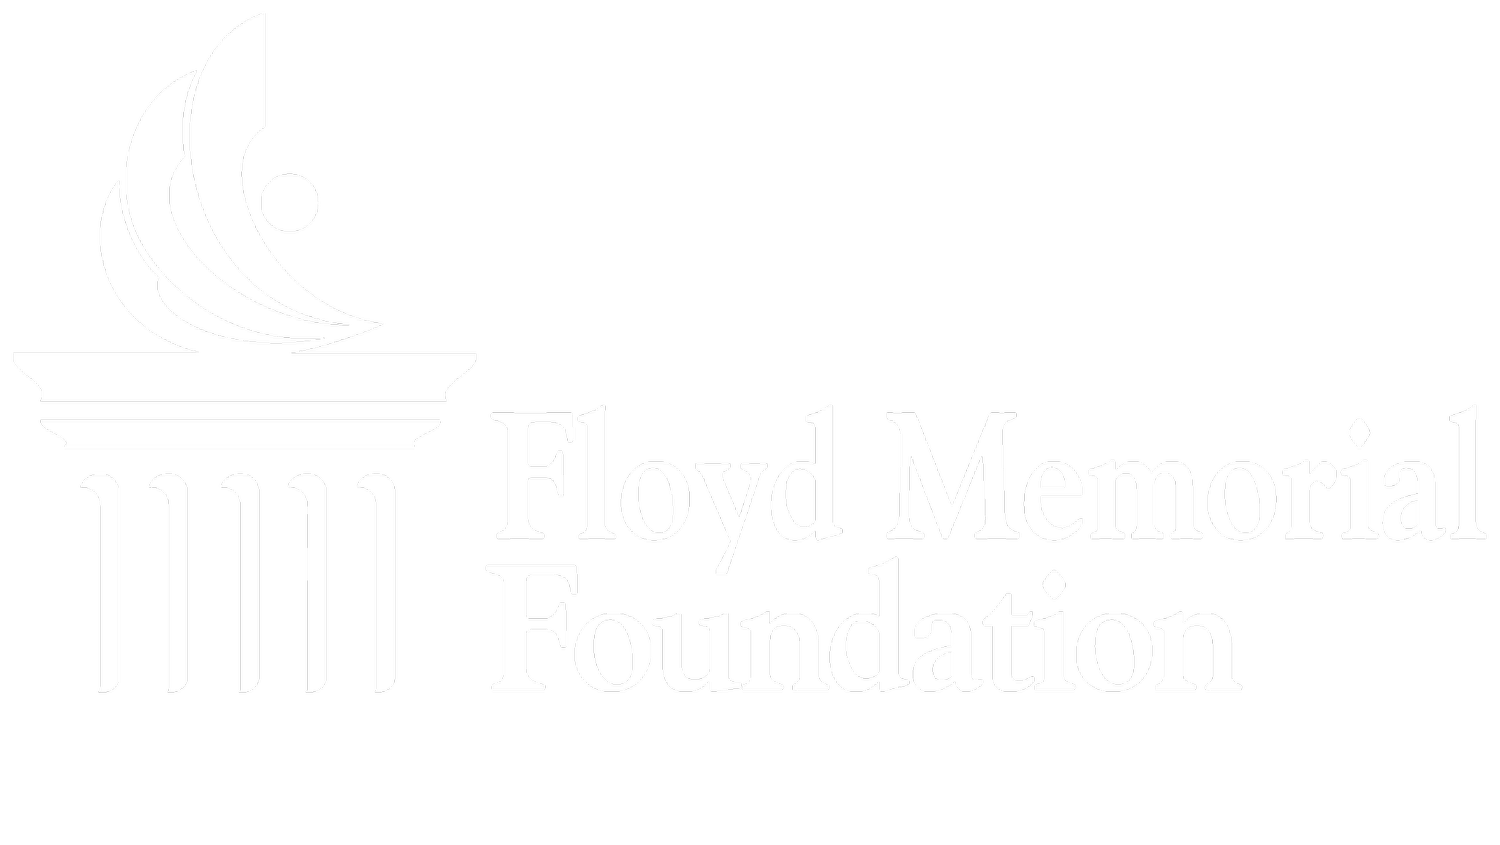 Floyd Memorial Foundation